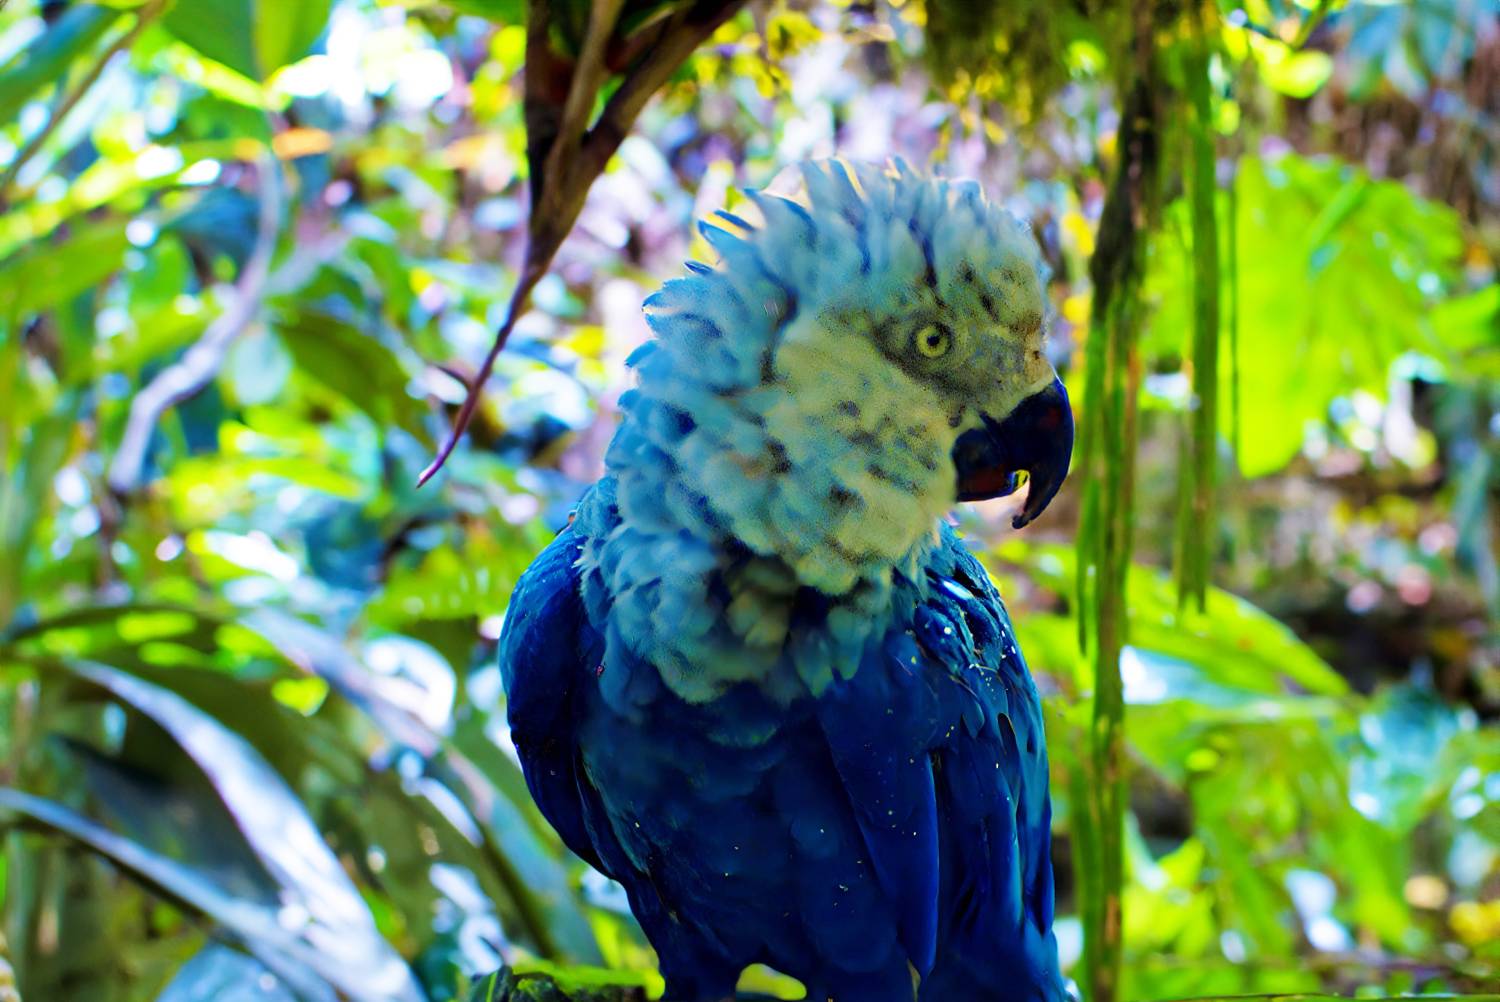 The flagship species of the Caatinga ecoregion is the Spix’s macaw (Cyanopsitta spixii).